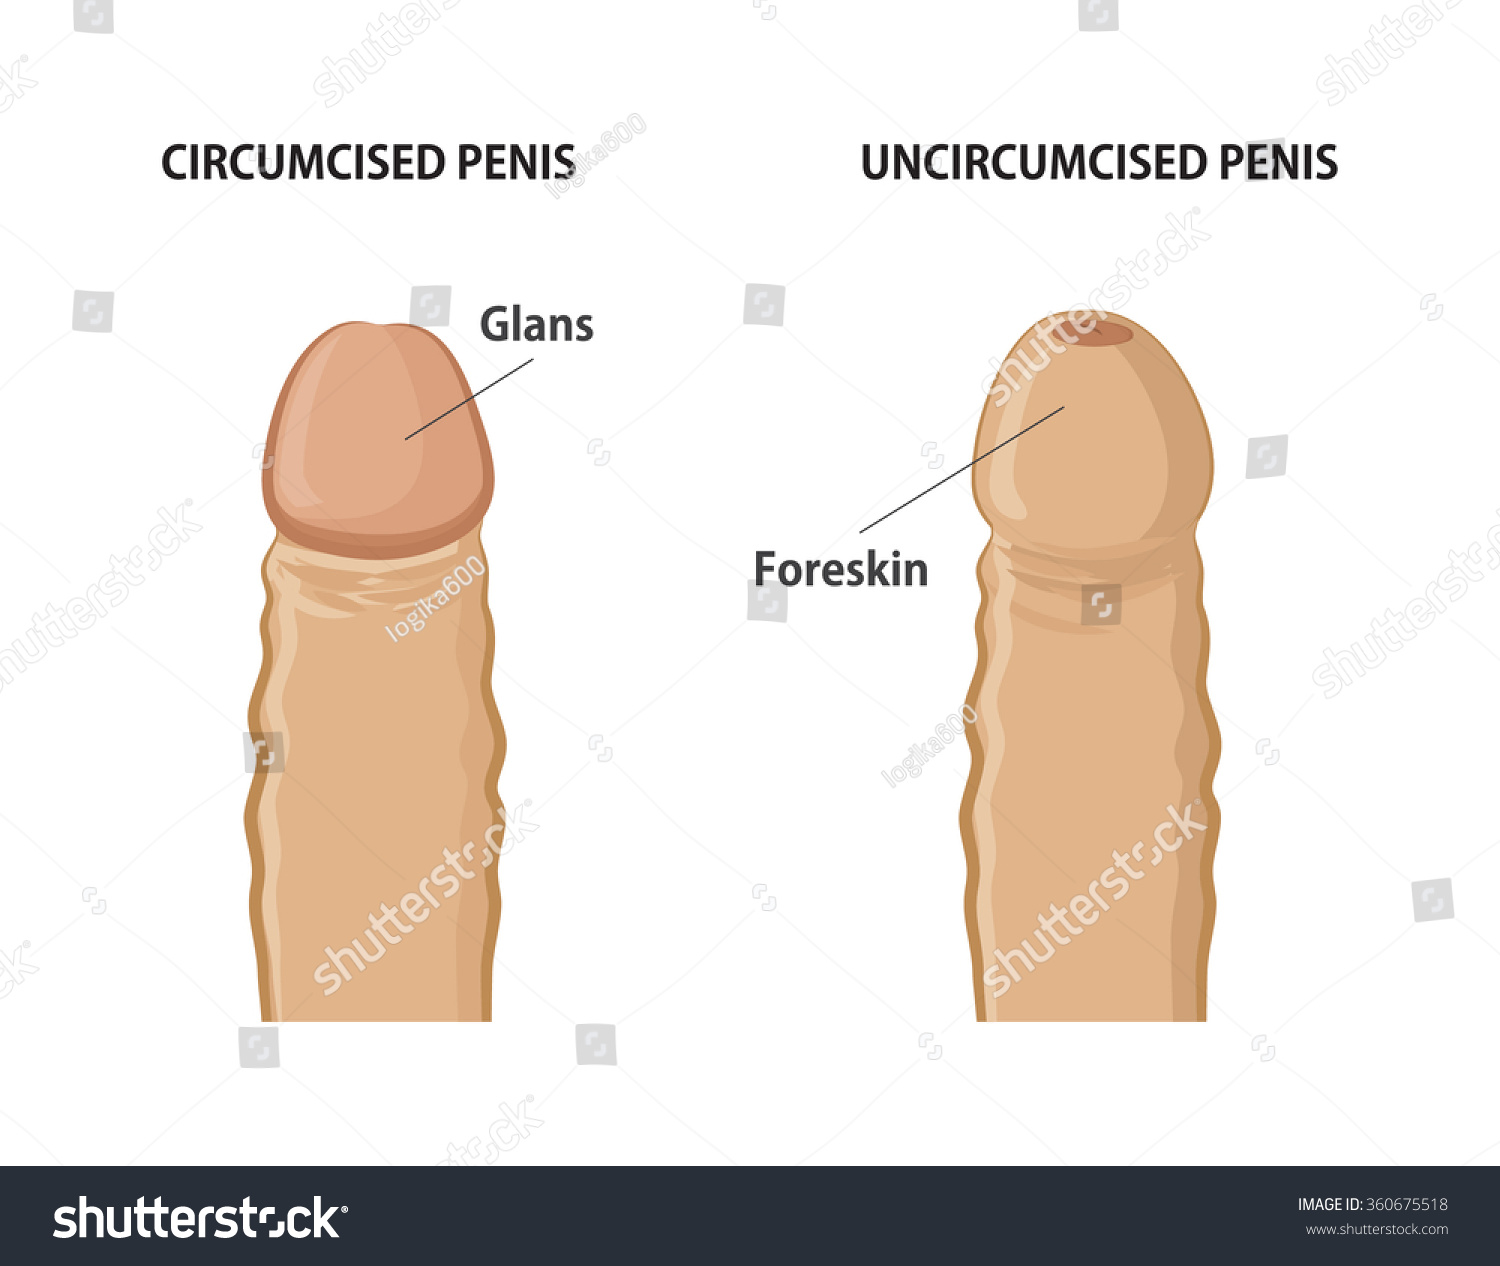 How To Circumsize A Penis 106